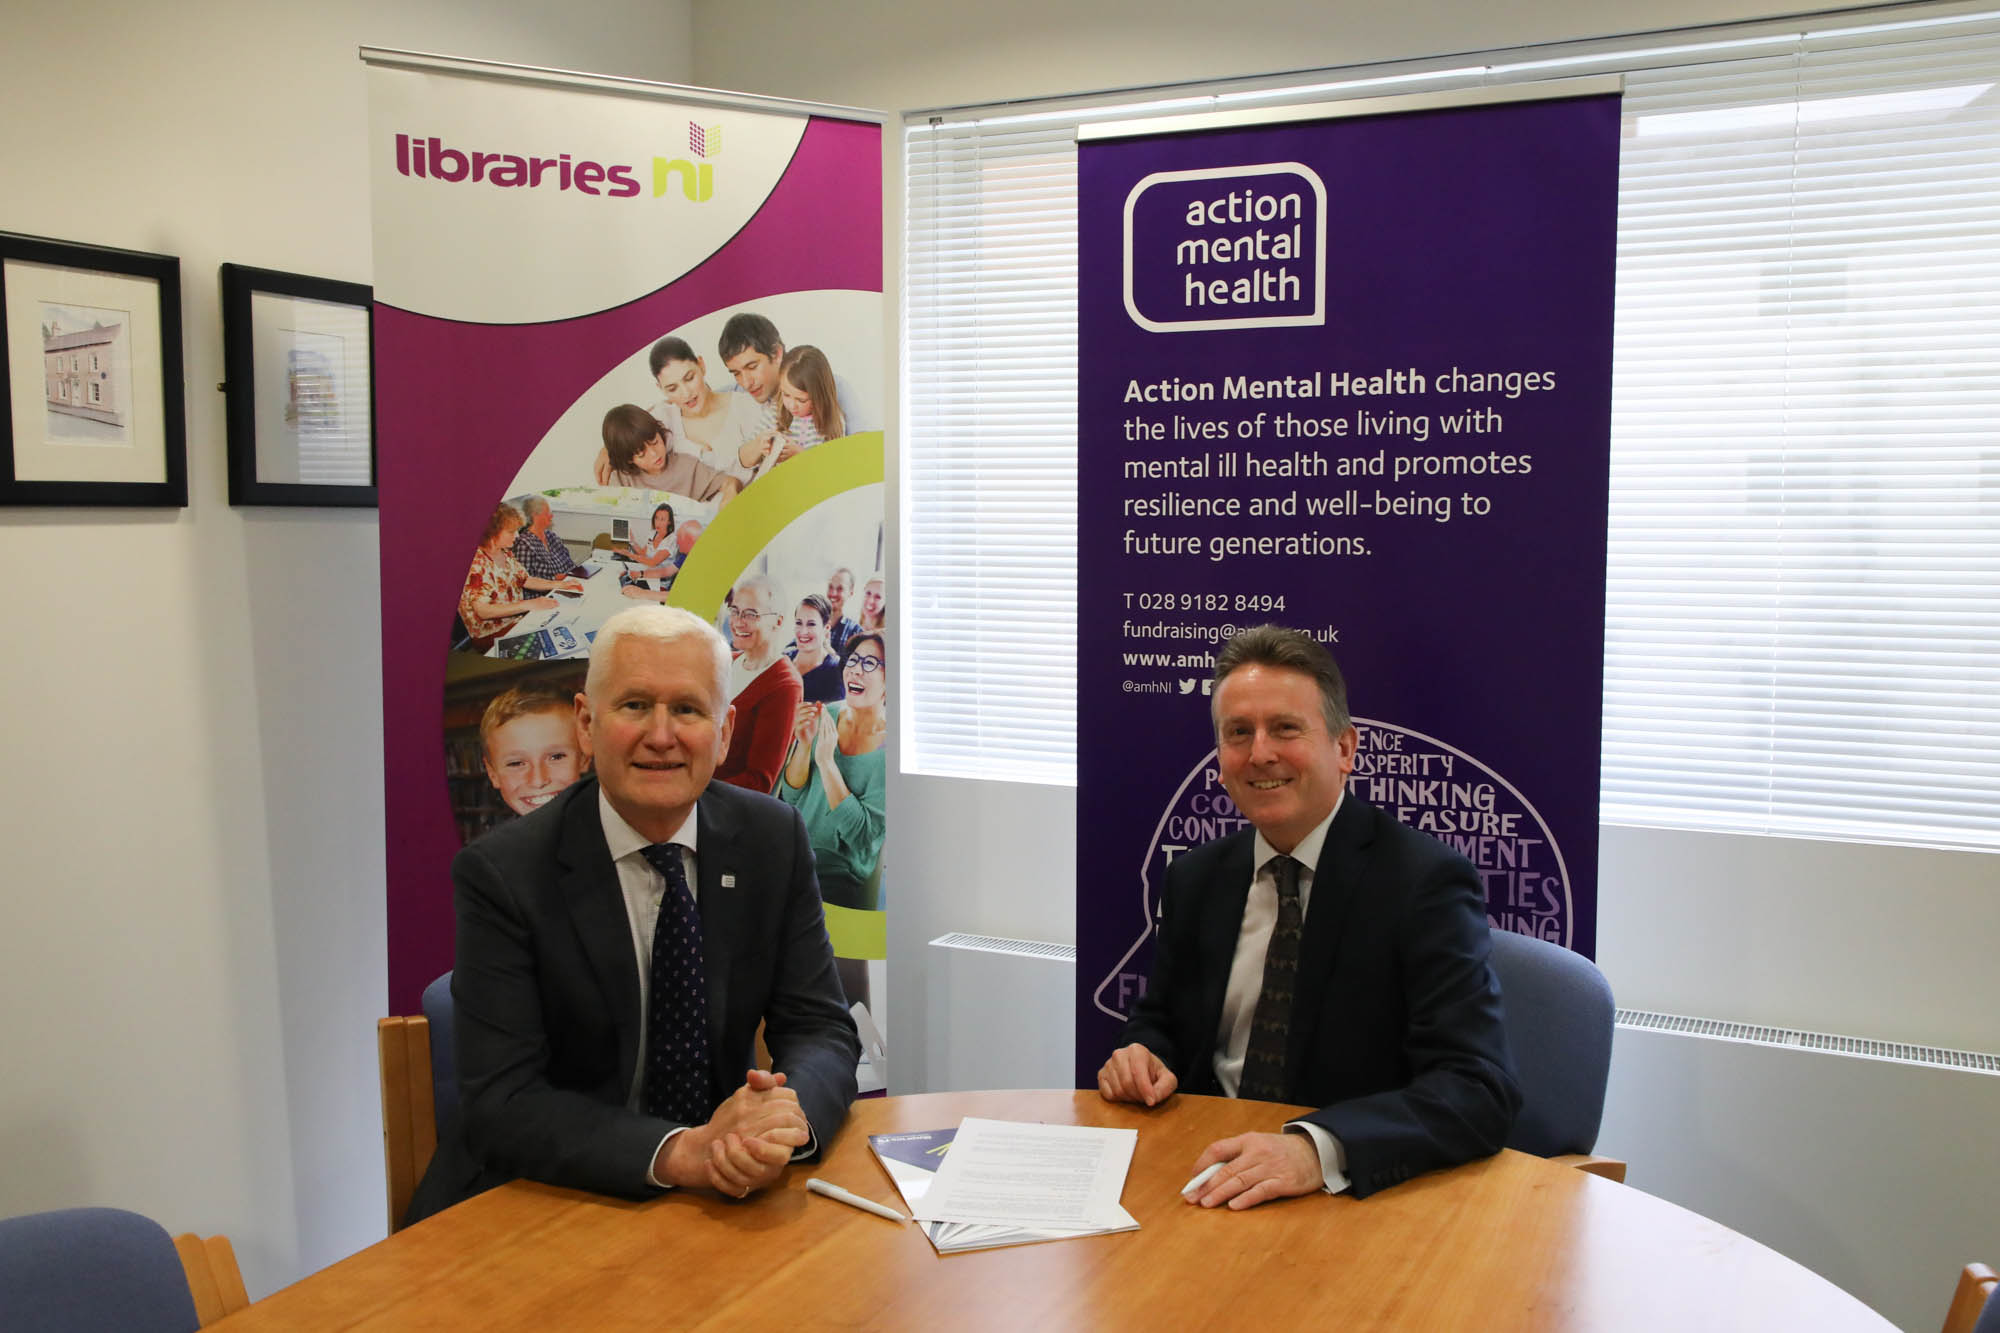 Jim O’Hagan, Chief Executive of Libraries NI and David Babington Chief Executive from Action Mental Health signing a memorandum of understanding